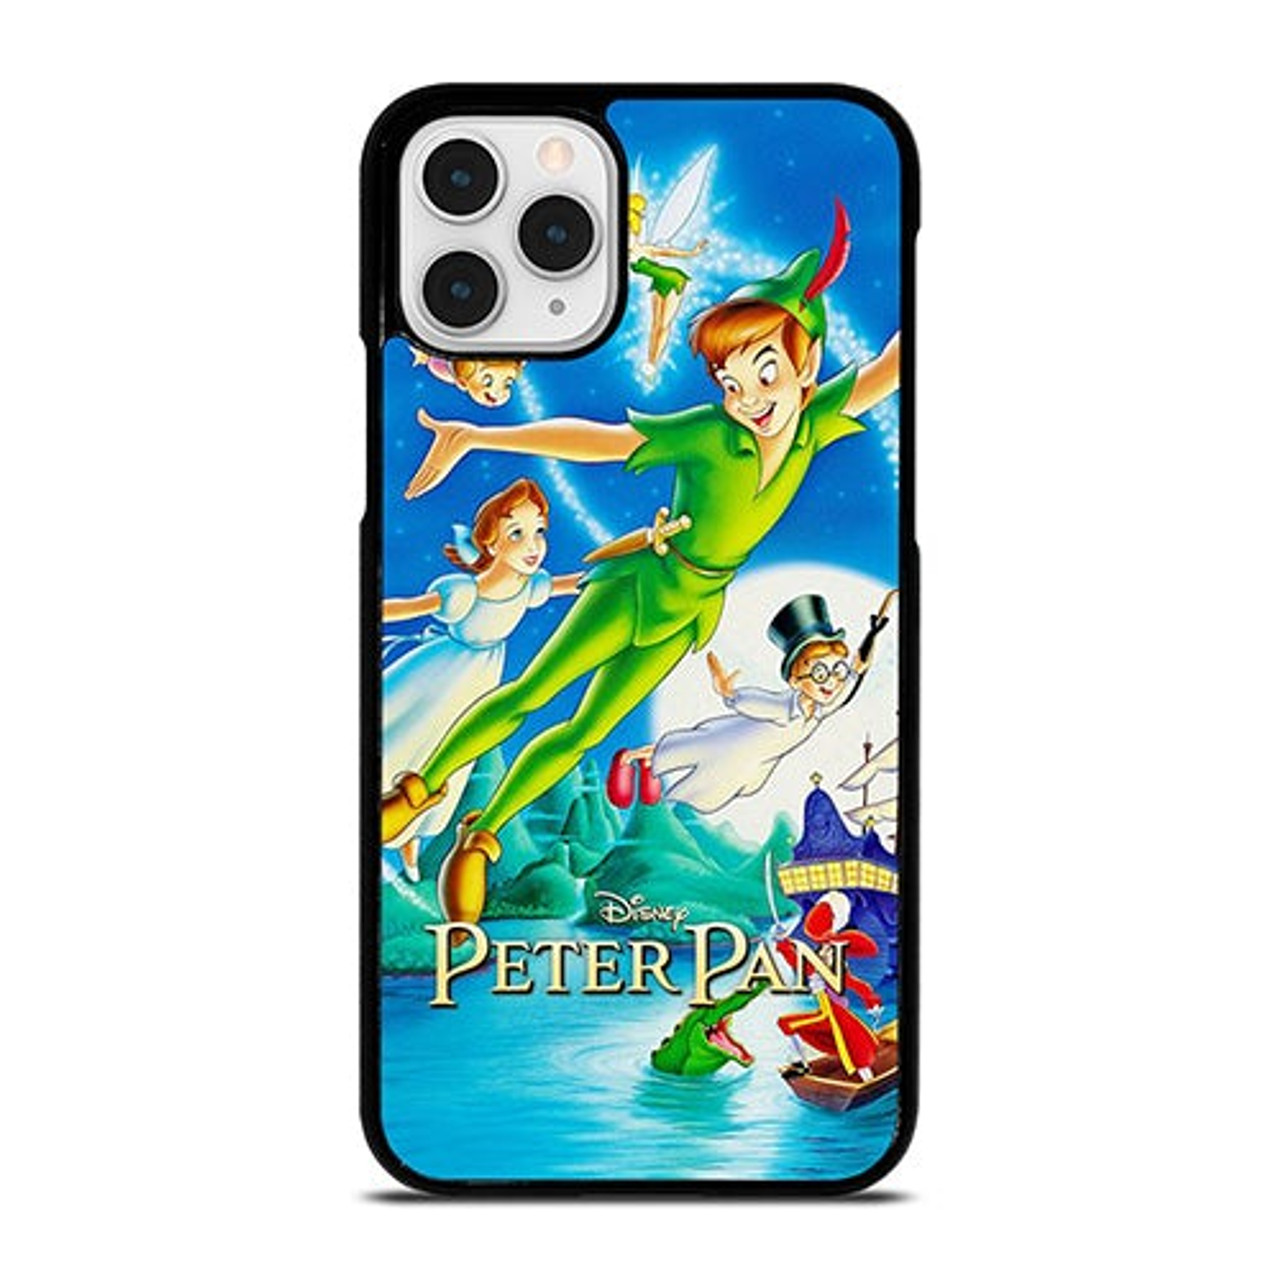 DISNEY PETER PAN iPhone 11 Pro Case Cover